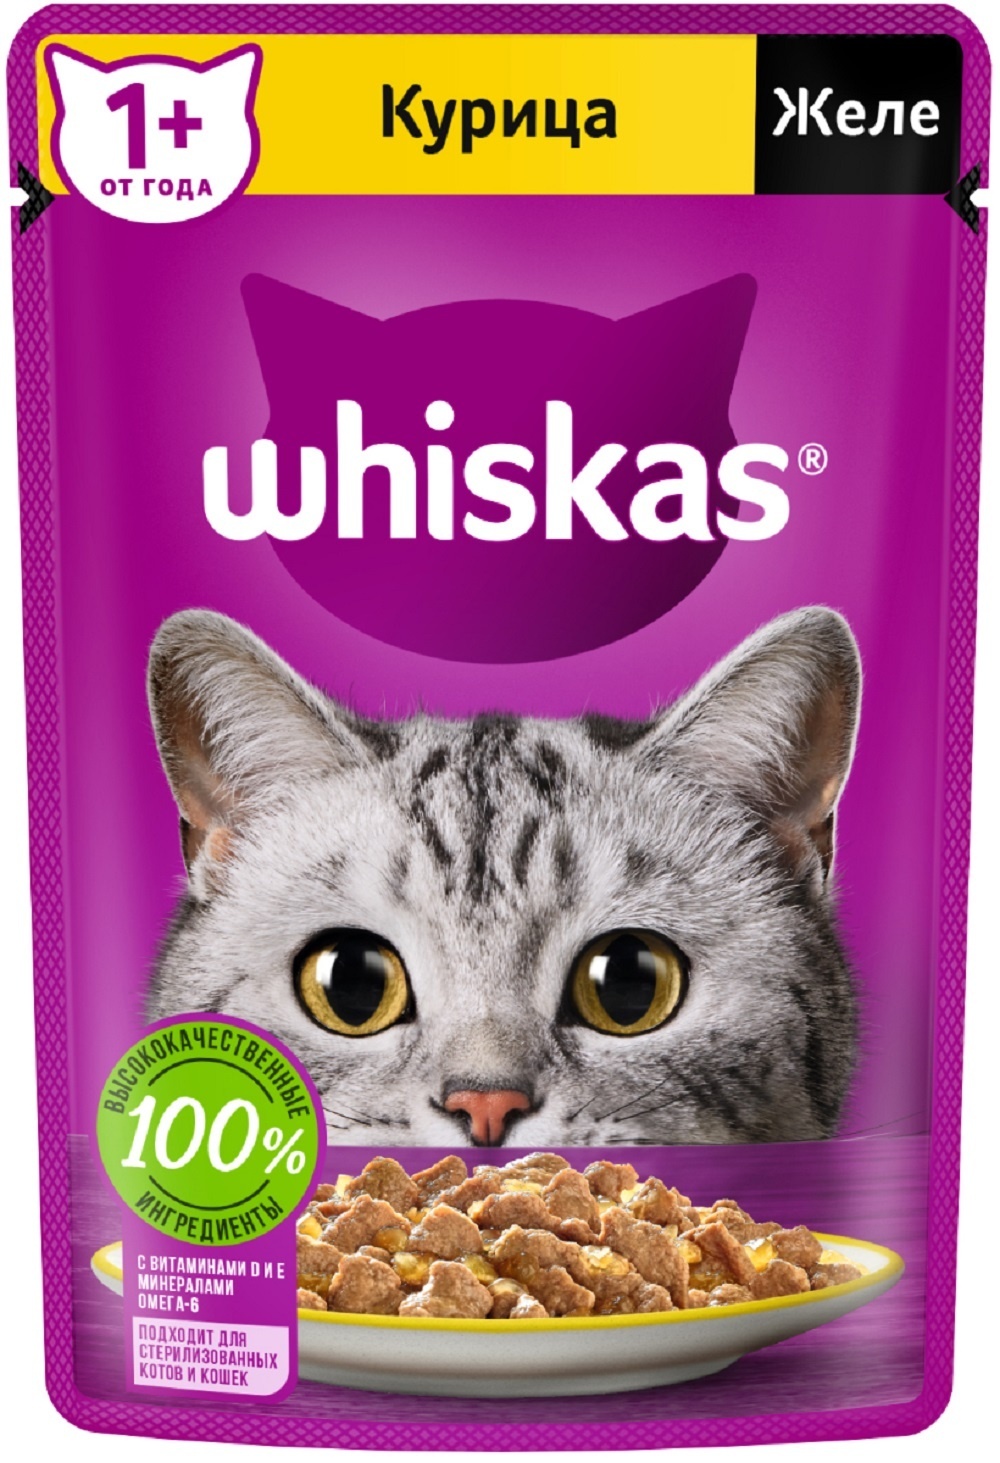 Whiskas Whiskas влажный корм для кошек желе, с курицей (75 г) 5 шт по 100 г